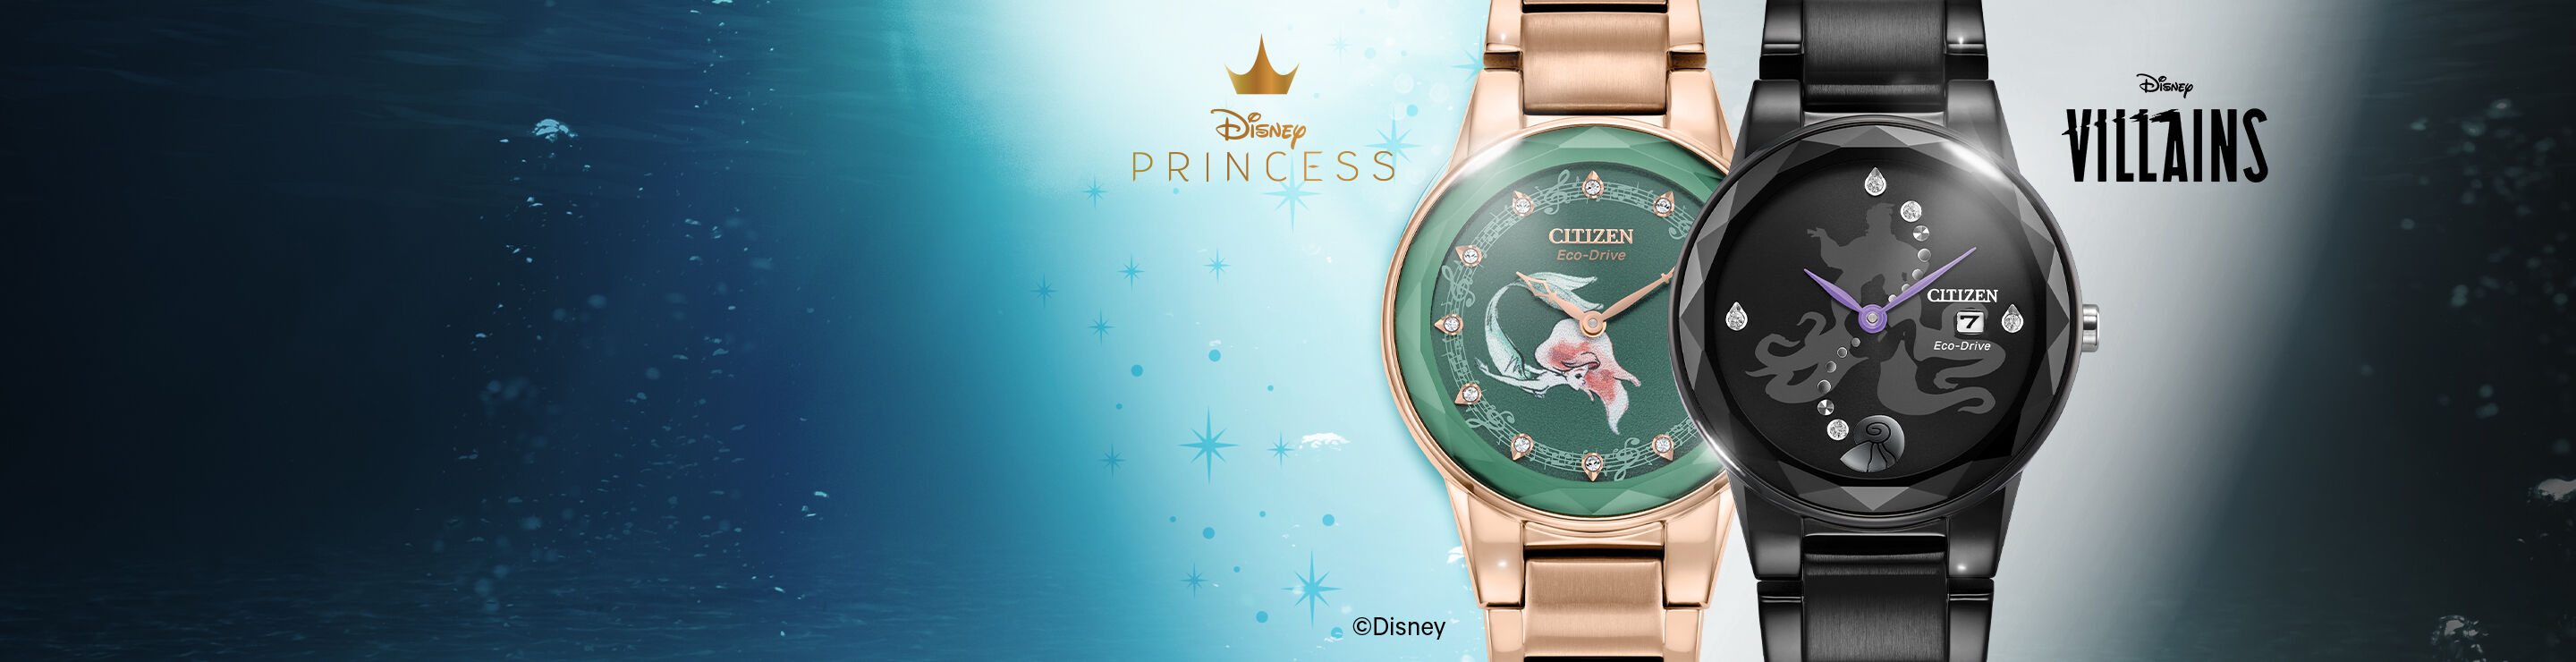 Disney Princess watches featuring Ariel and Jasmine - Inside the Magic |  Disney jewelry, Disney accessories, Disney watches